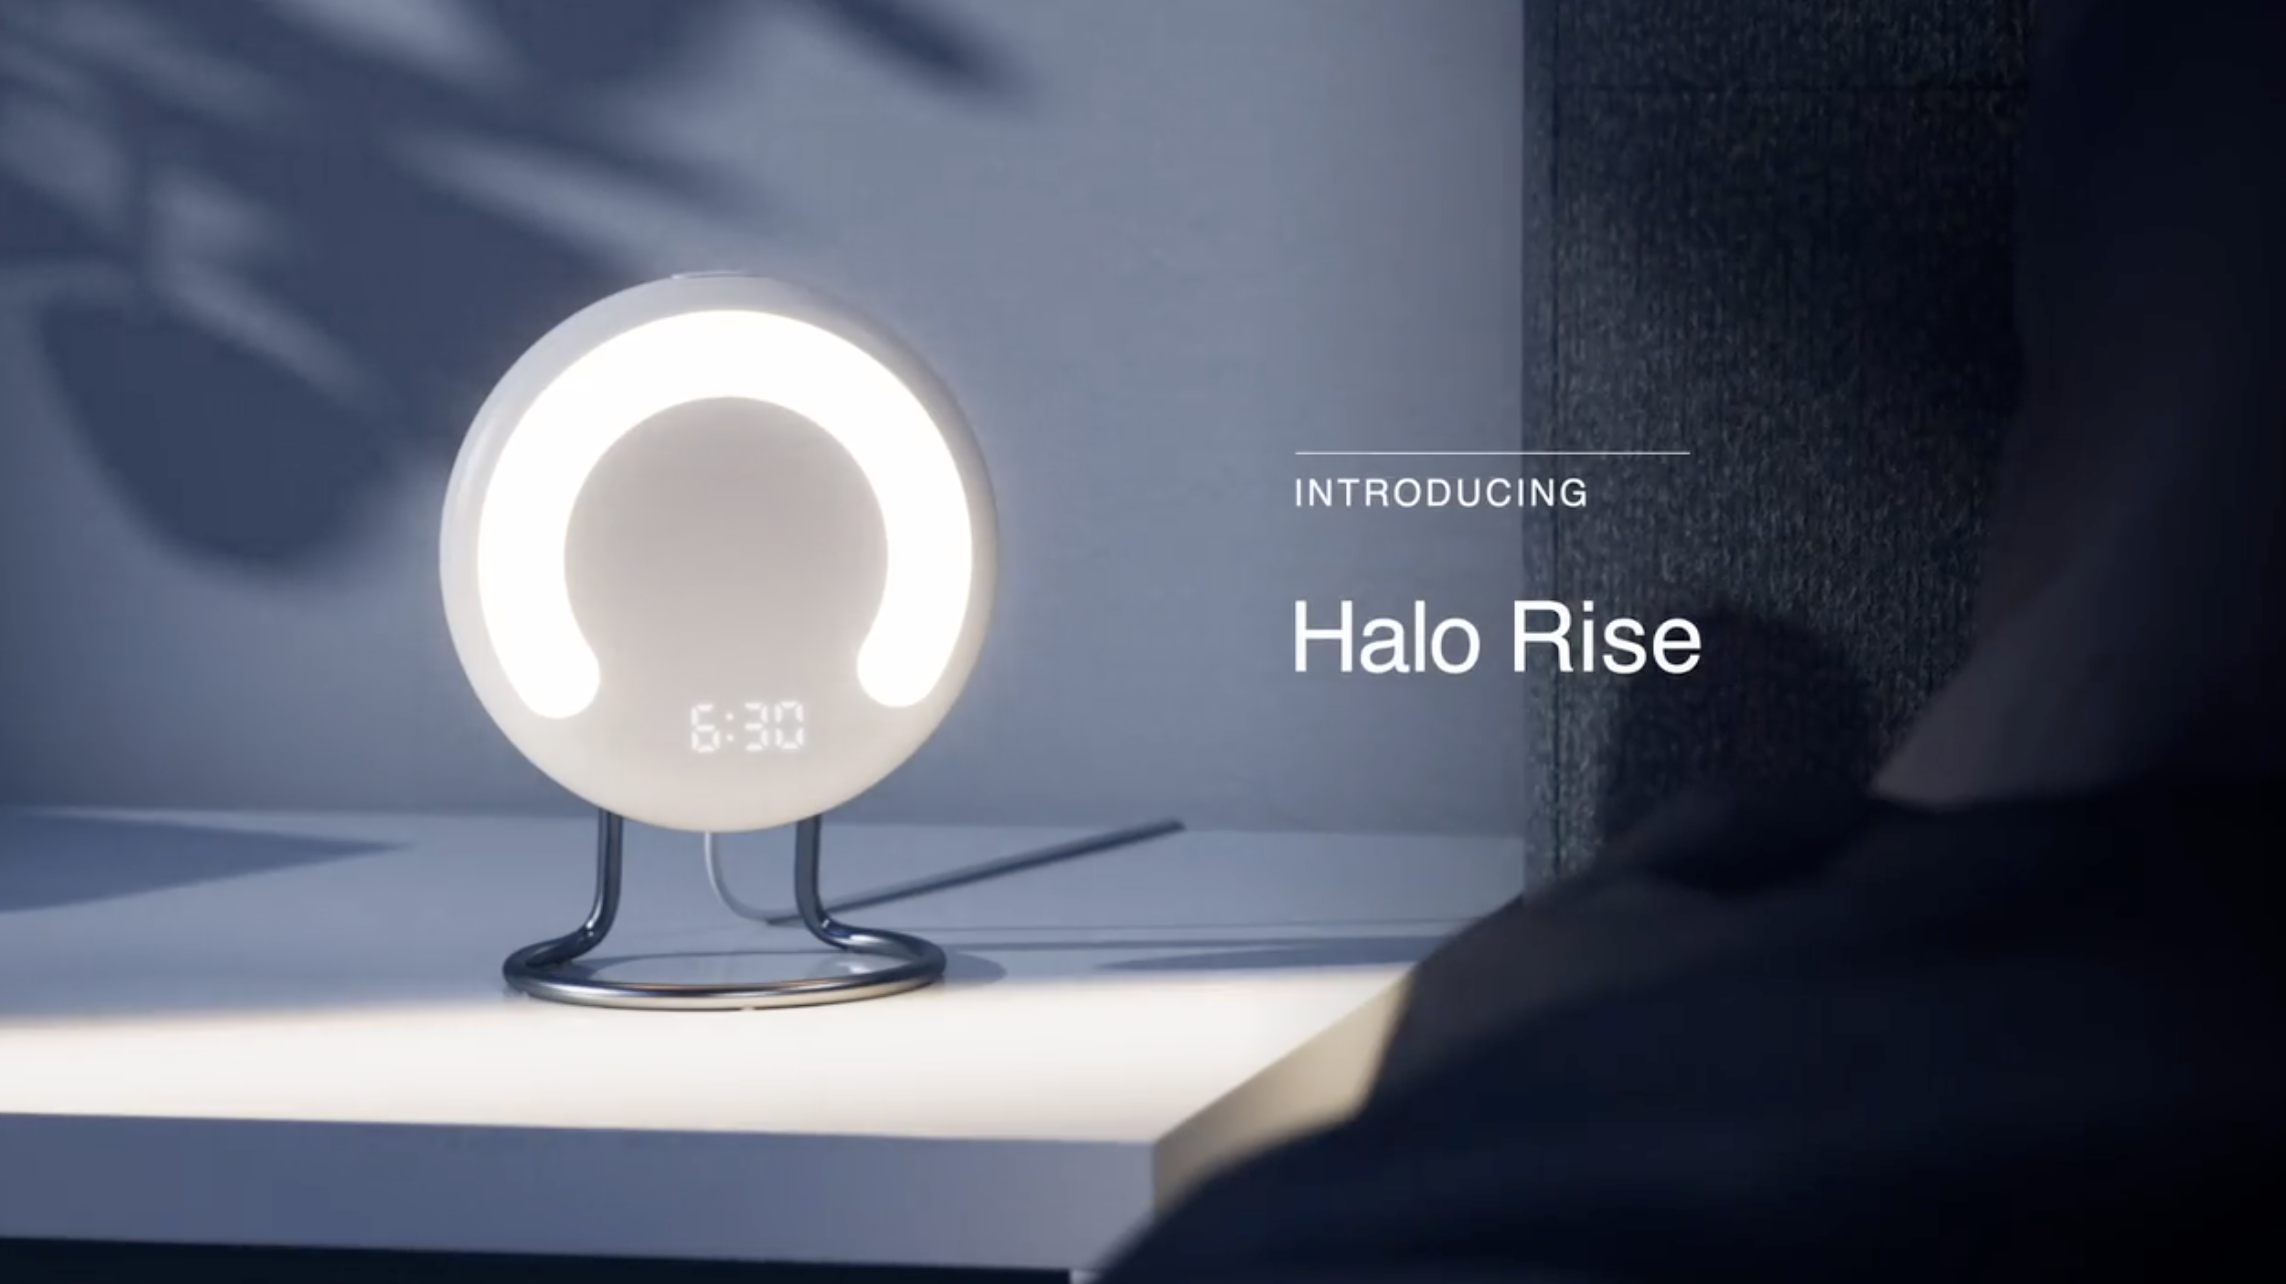 Halo Rise at Amazon Event